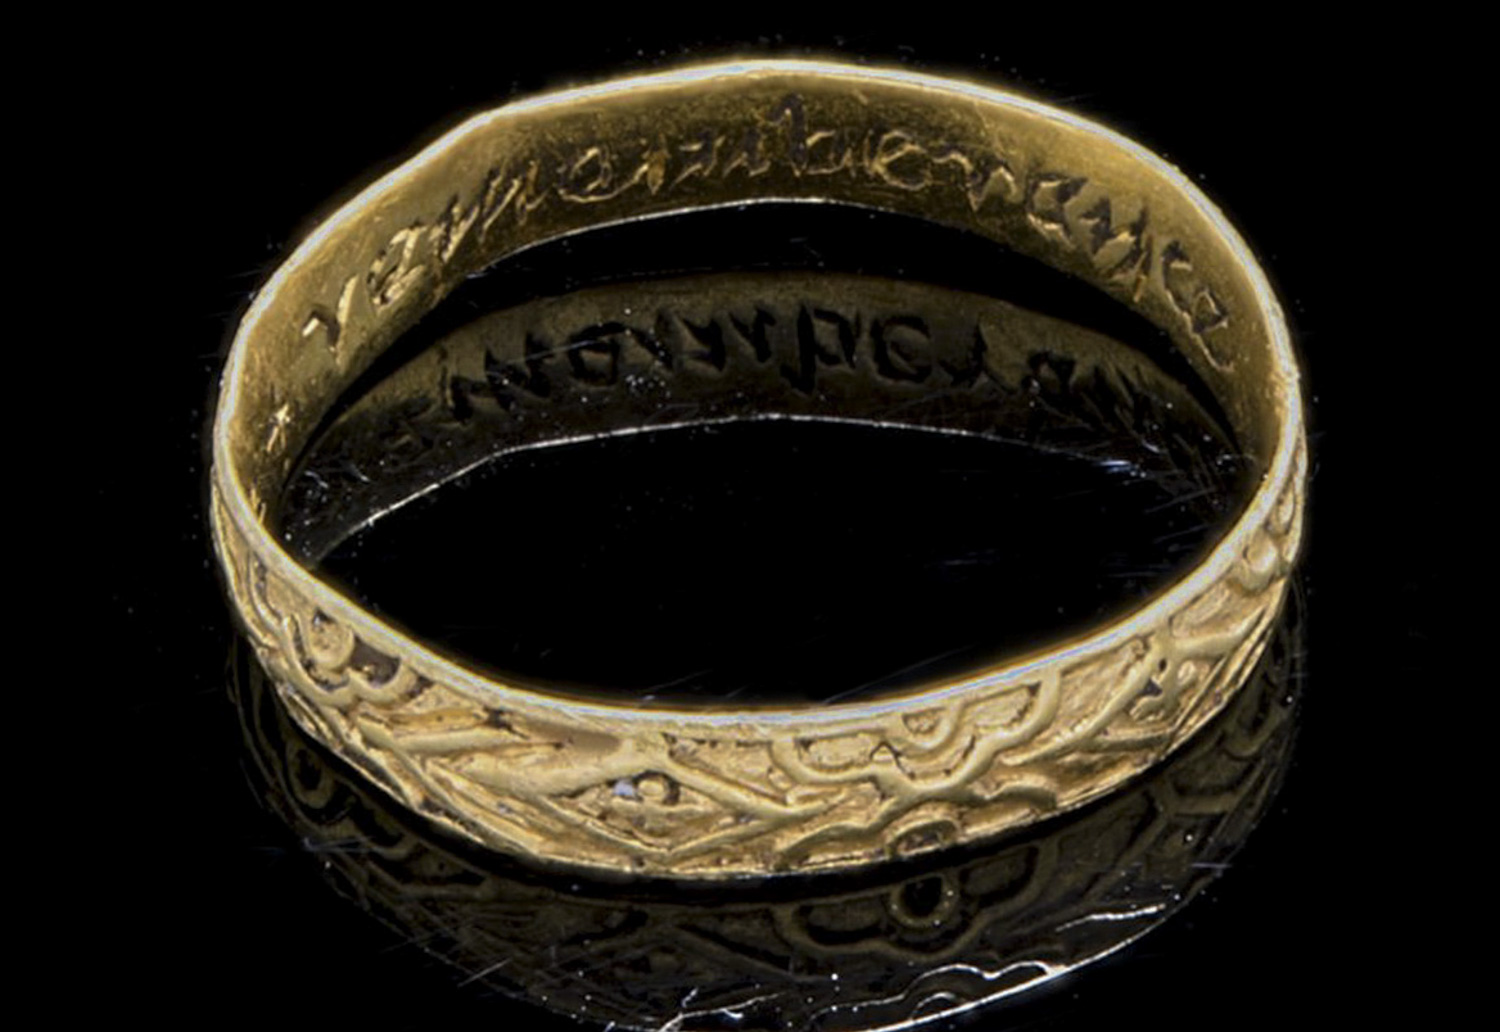 17th century gold ring found near Fraserburgh